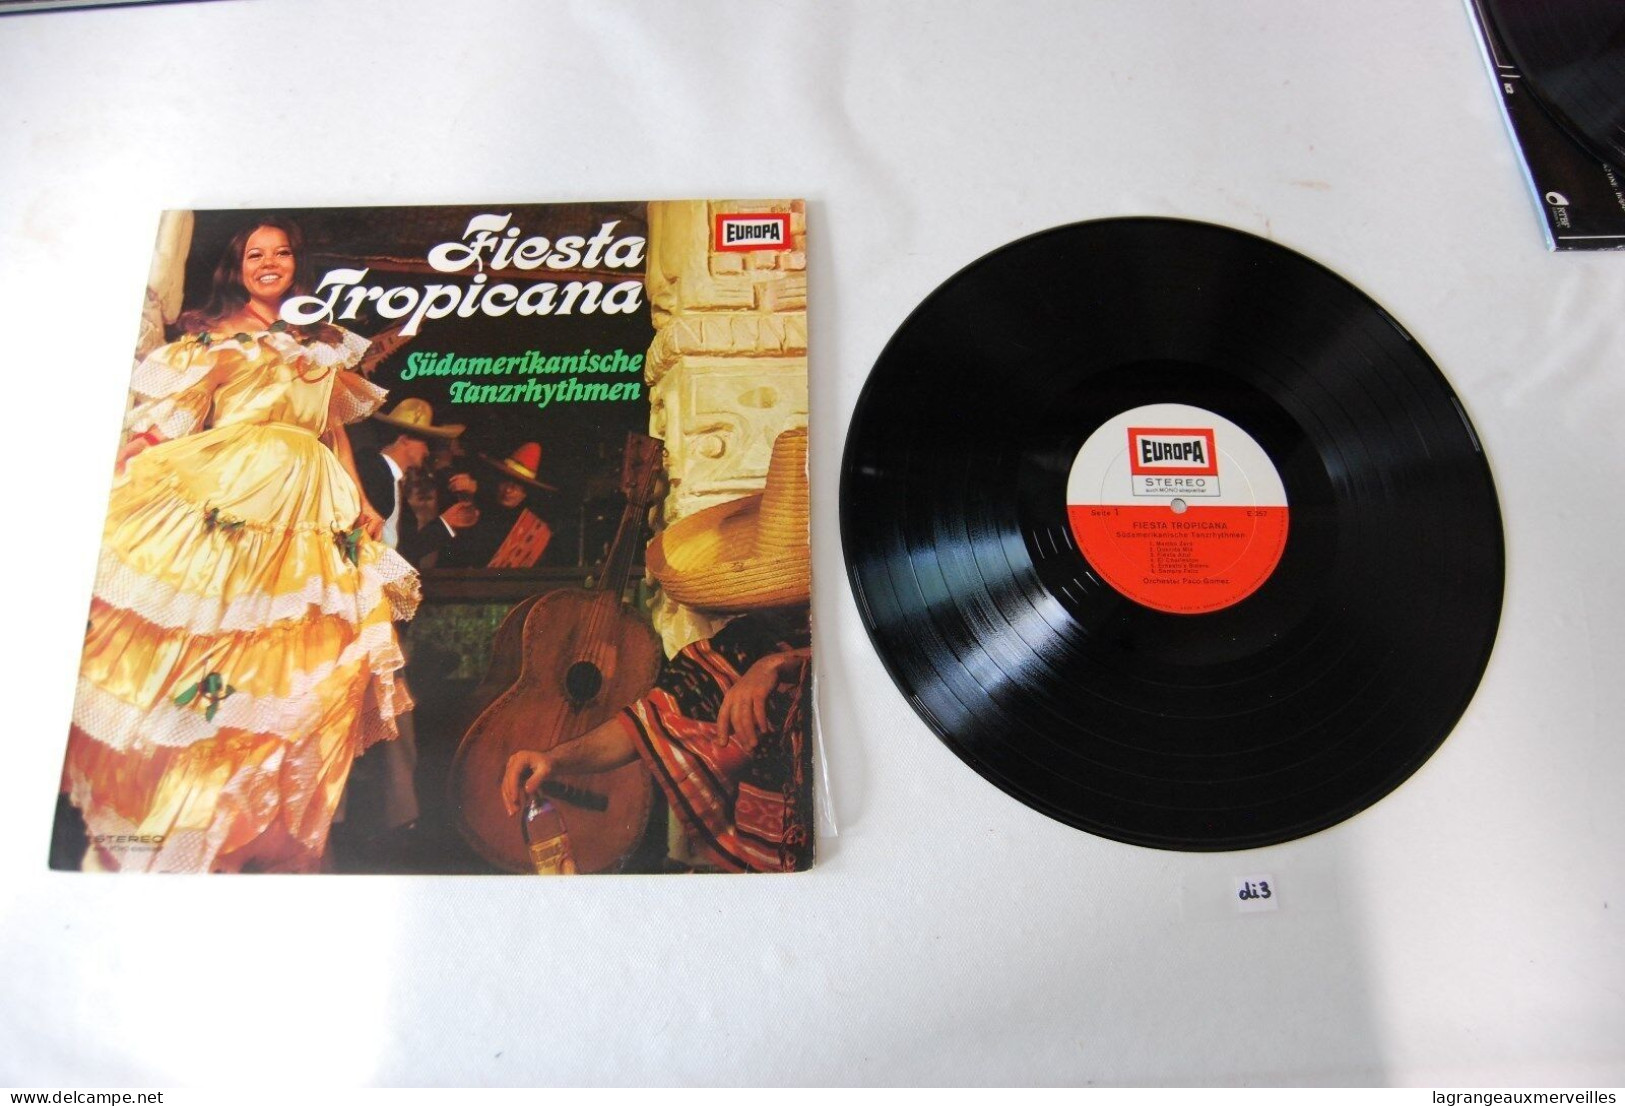 Di3- Vinyl 33 T - Fiesta Tropicana - Europa - Musiques Du Monde